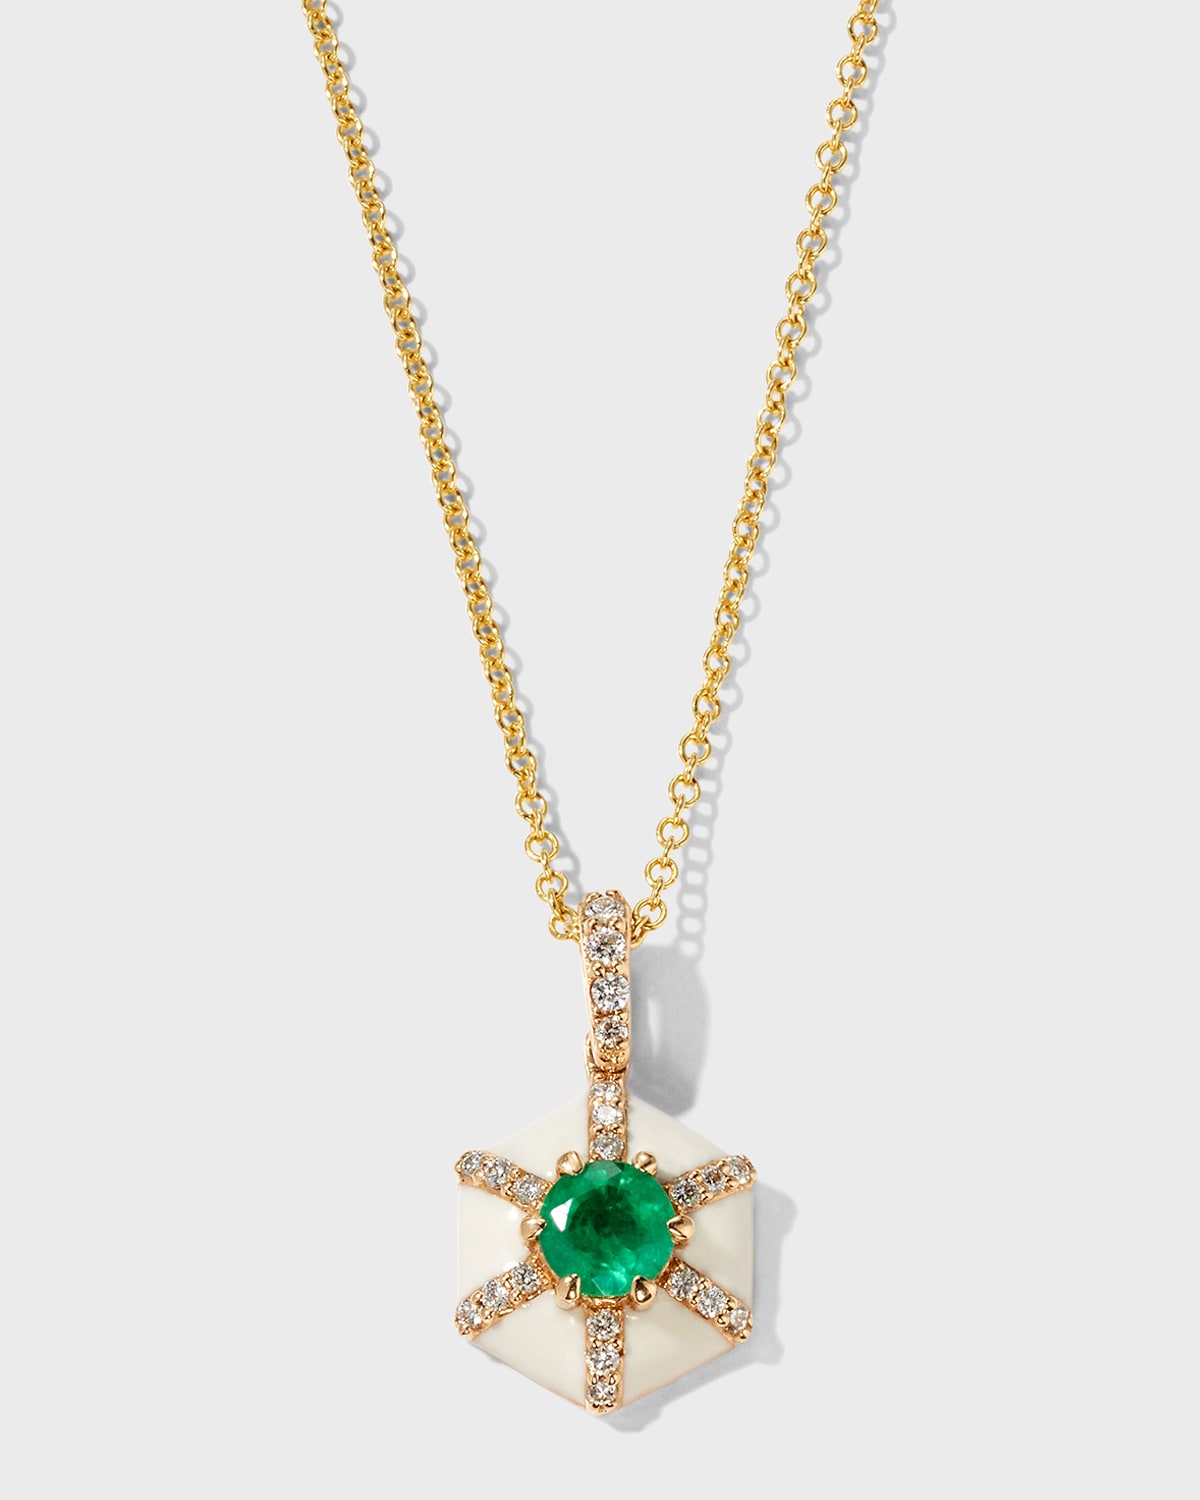 Goshwara 18K Queen Round Emerald and Diamond Pendant Necklace with White Enamel